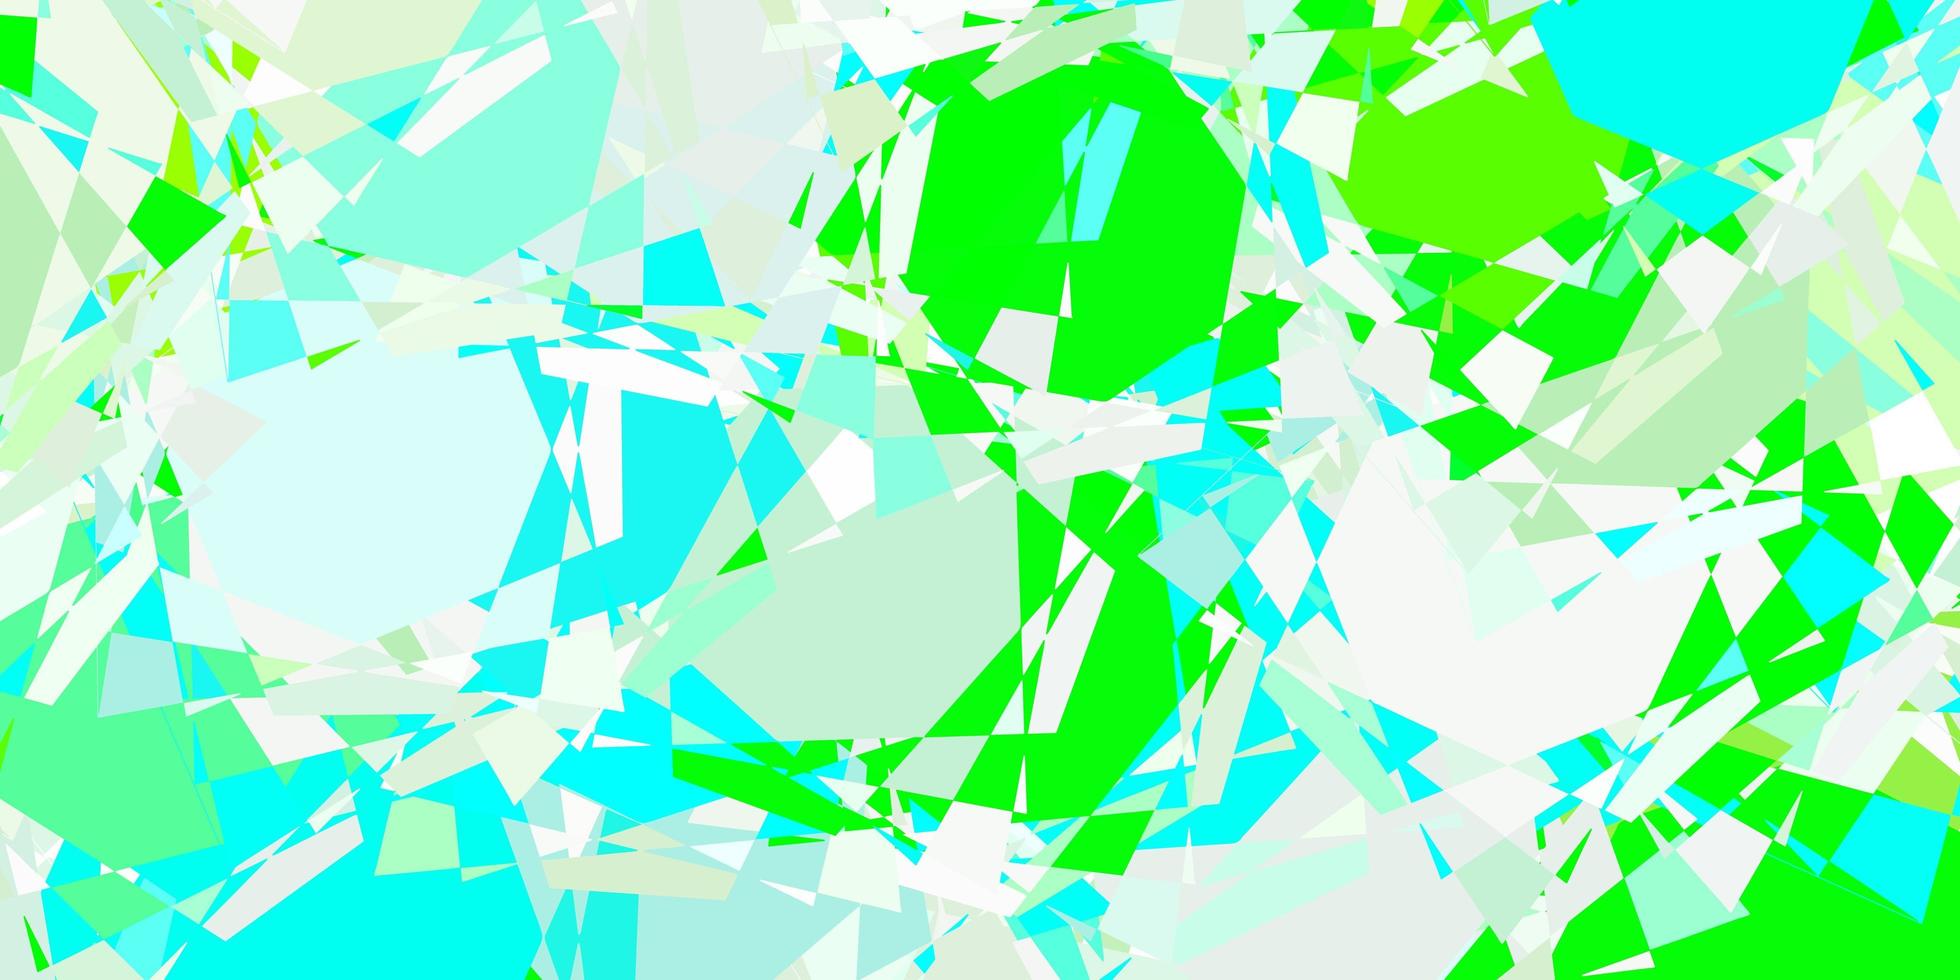 hellgrünes Vektorlayout mit Dreiecksformen. vektor